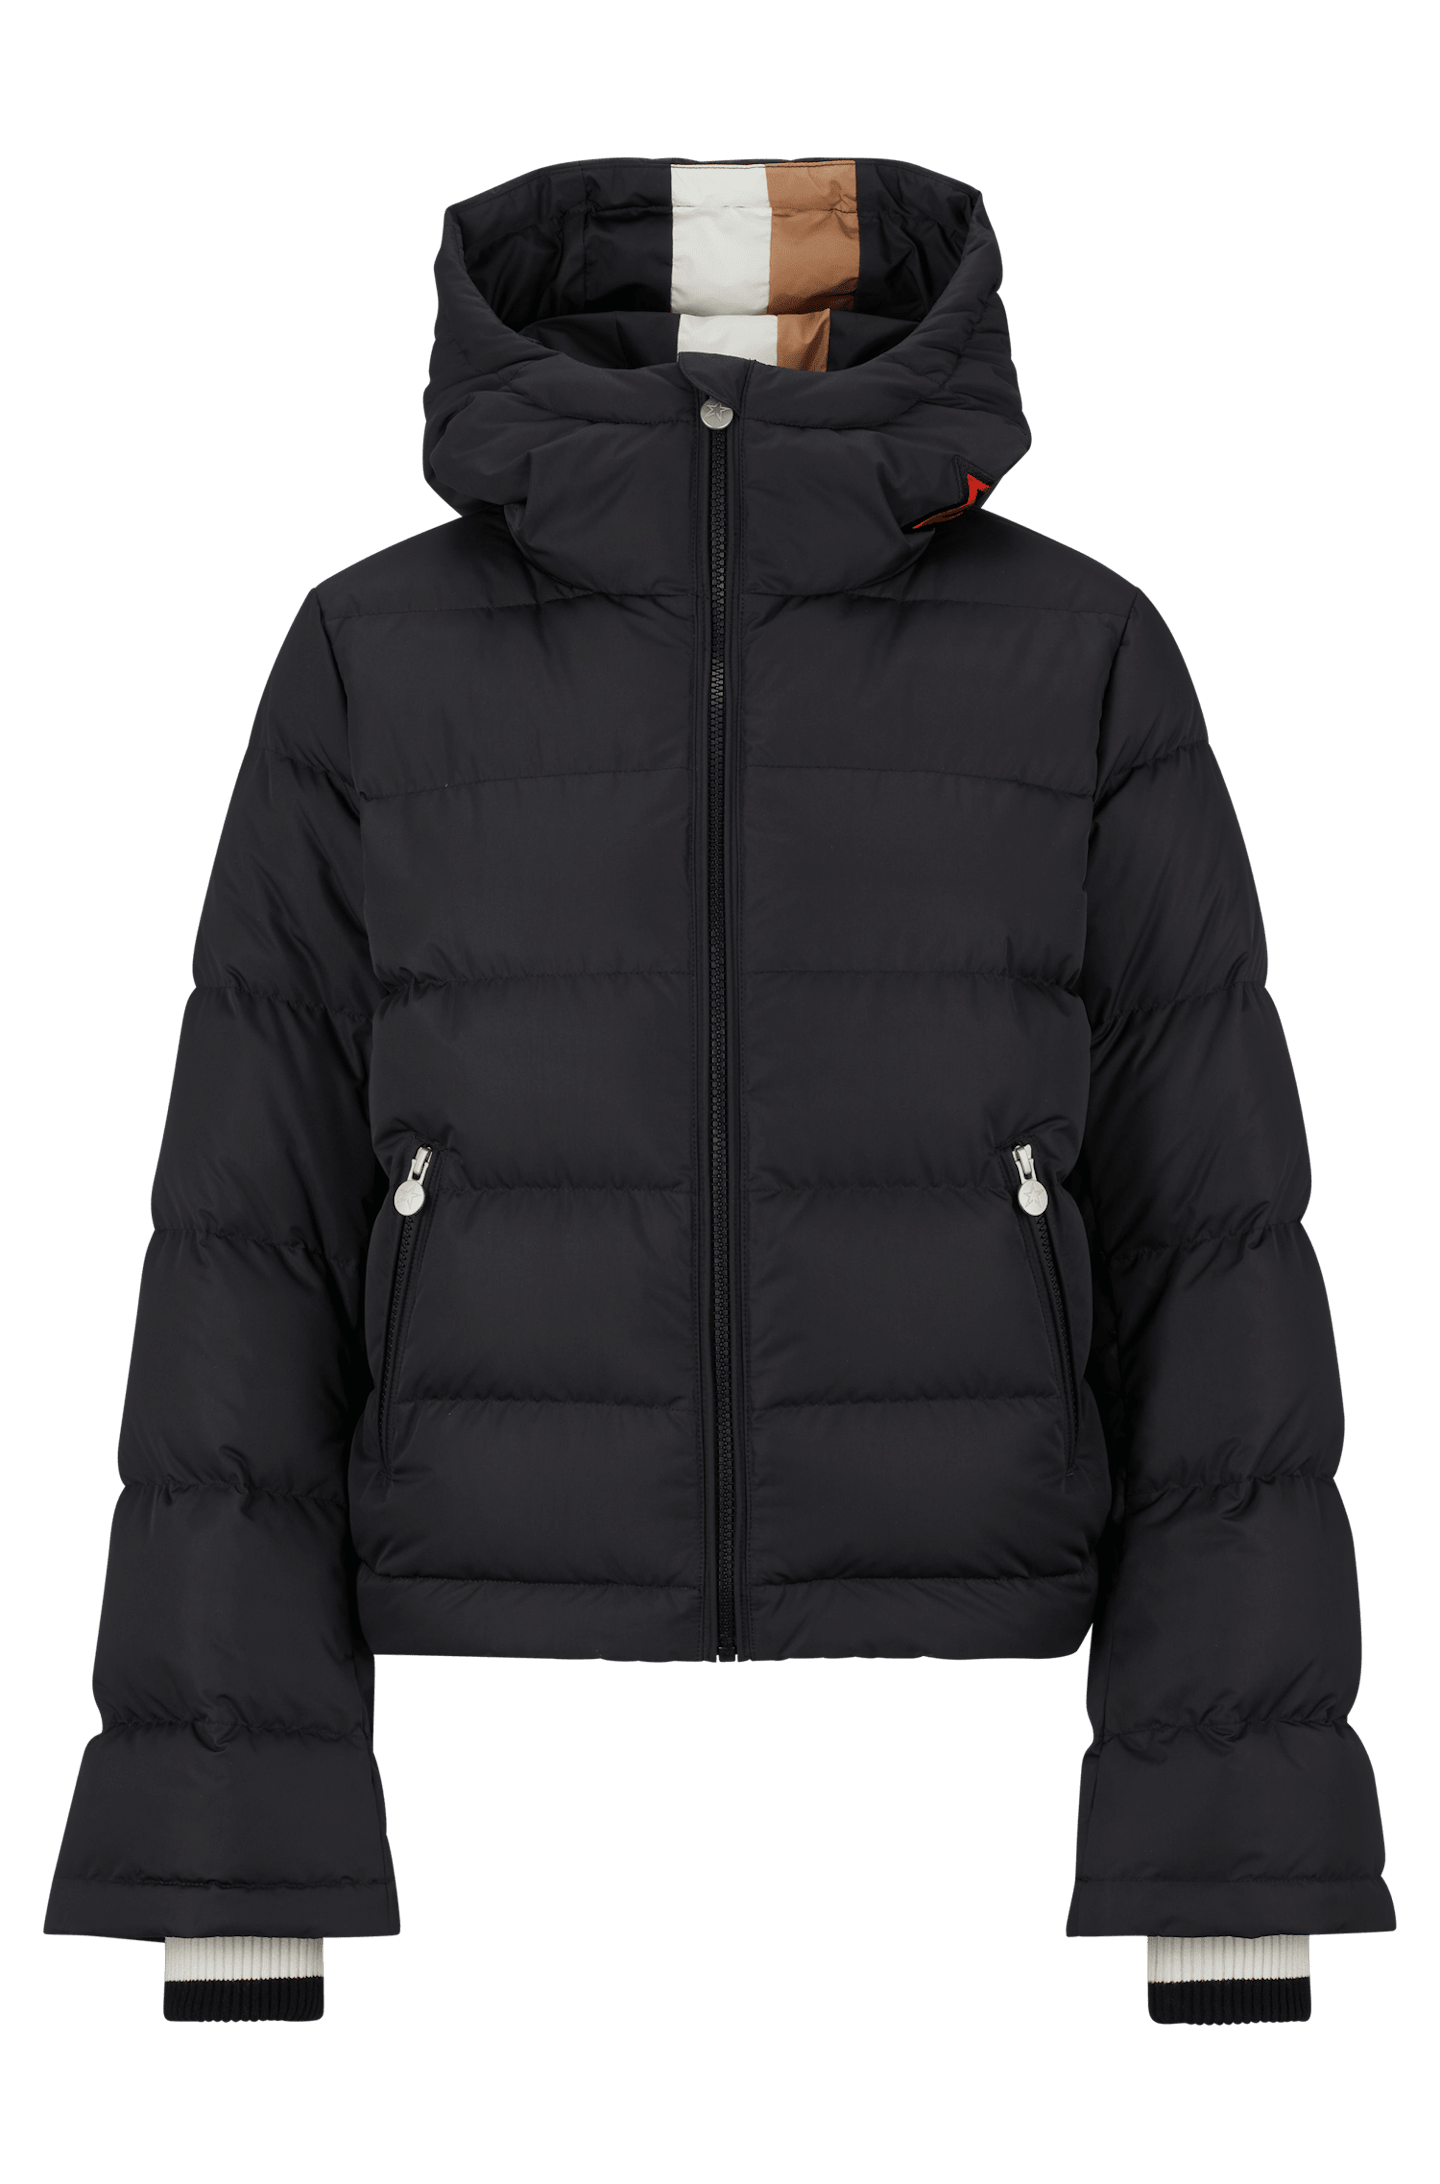 Black Hooded Jacket With Capsule Detailing